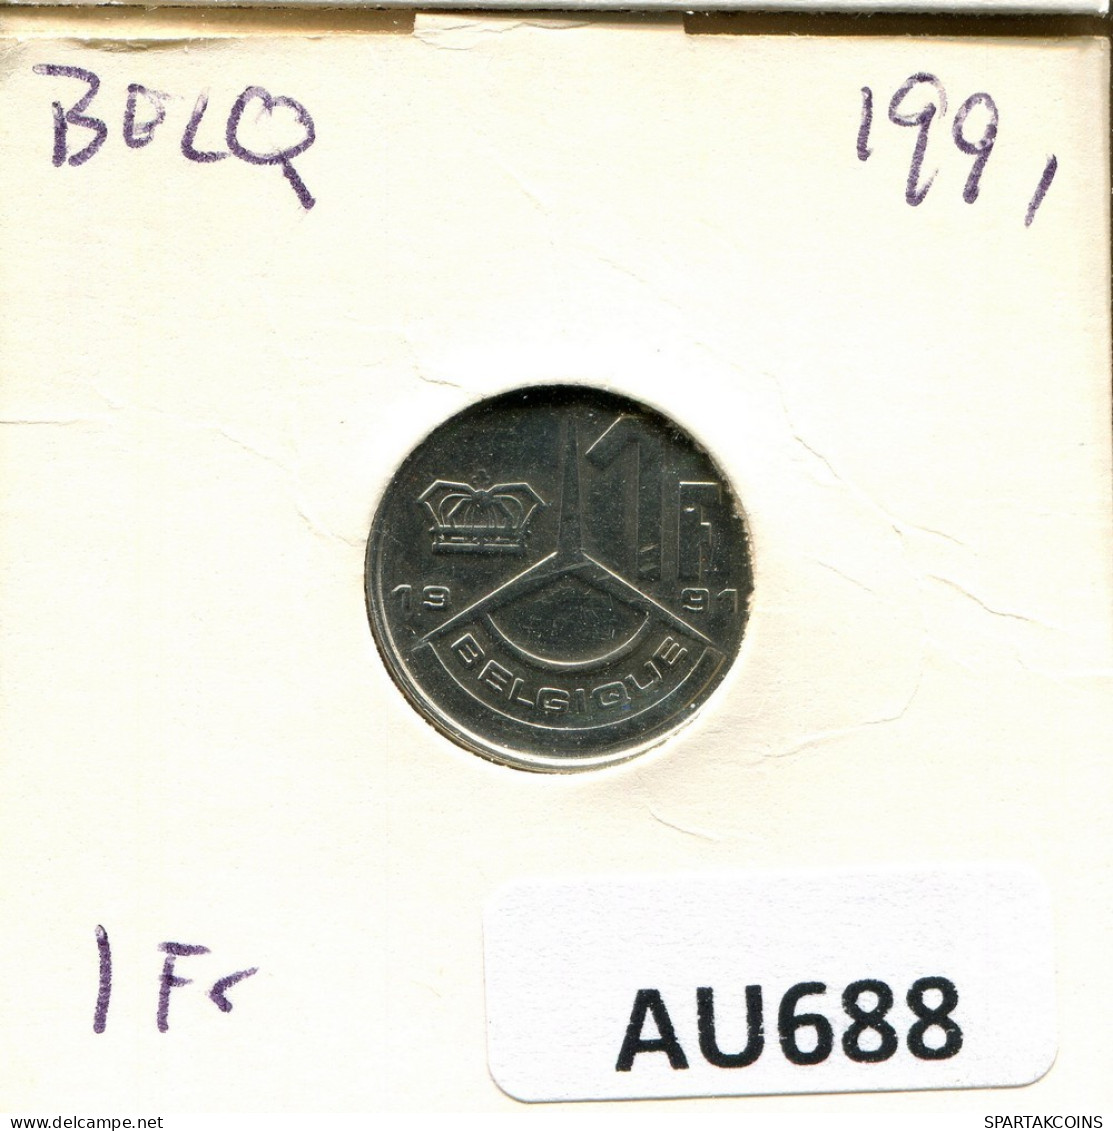 1 FRANC 1991 FRENCH Text BELGIUM Coin #AU688.U.A - 1 Frank